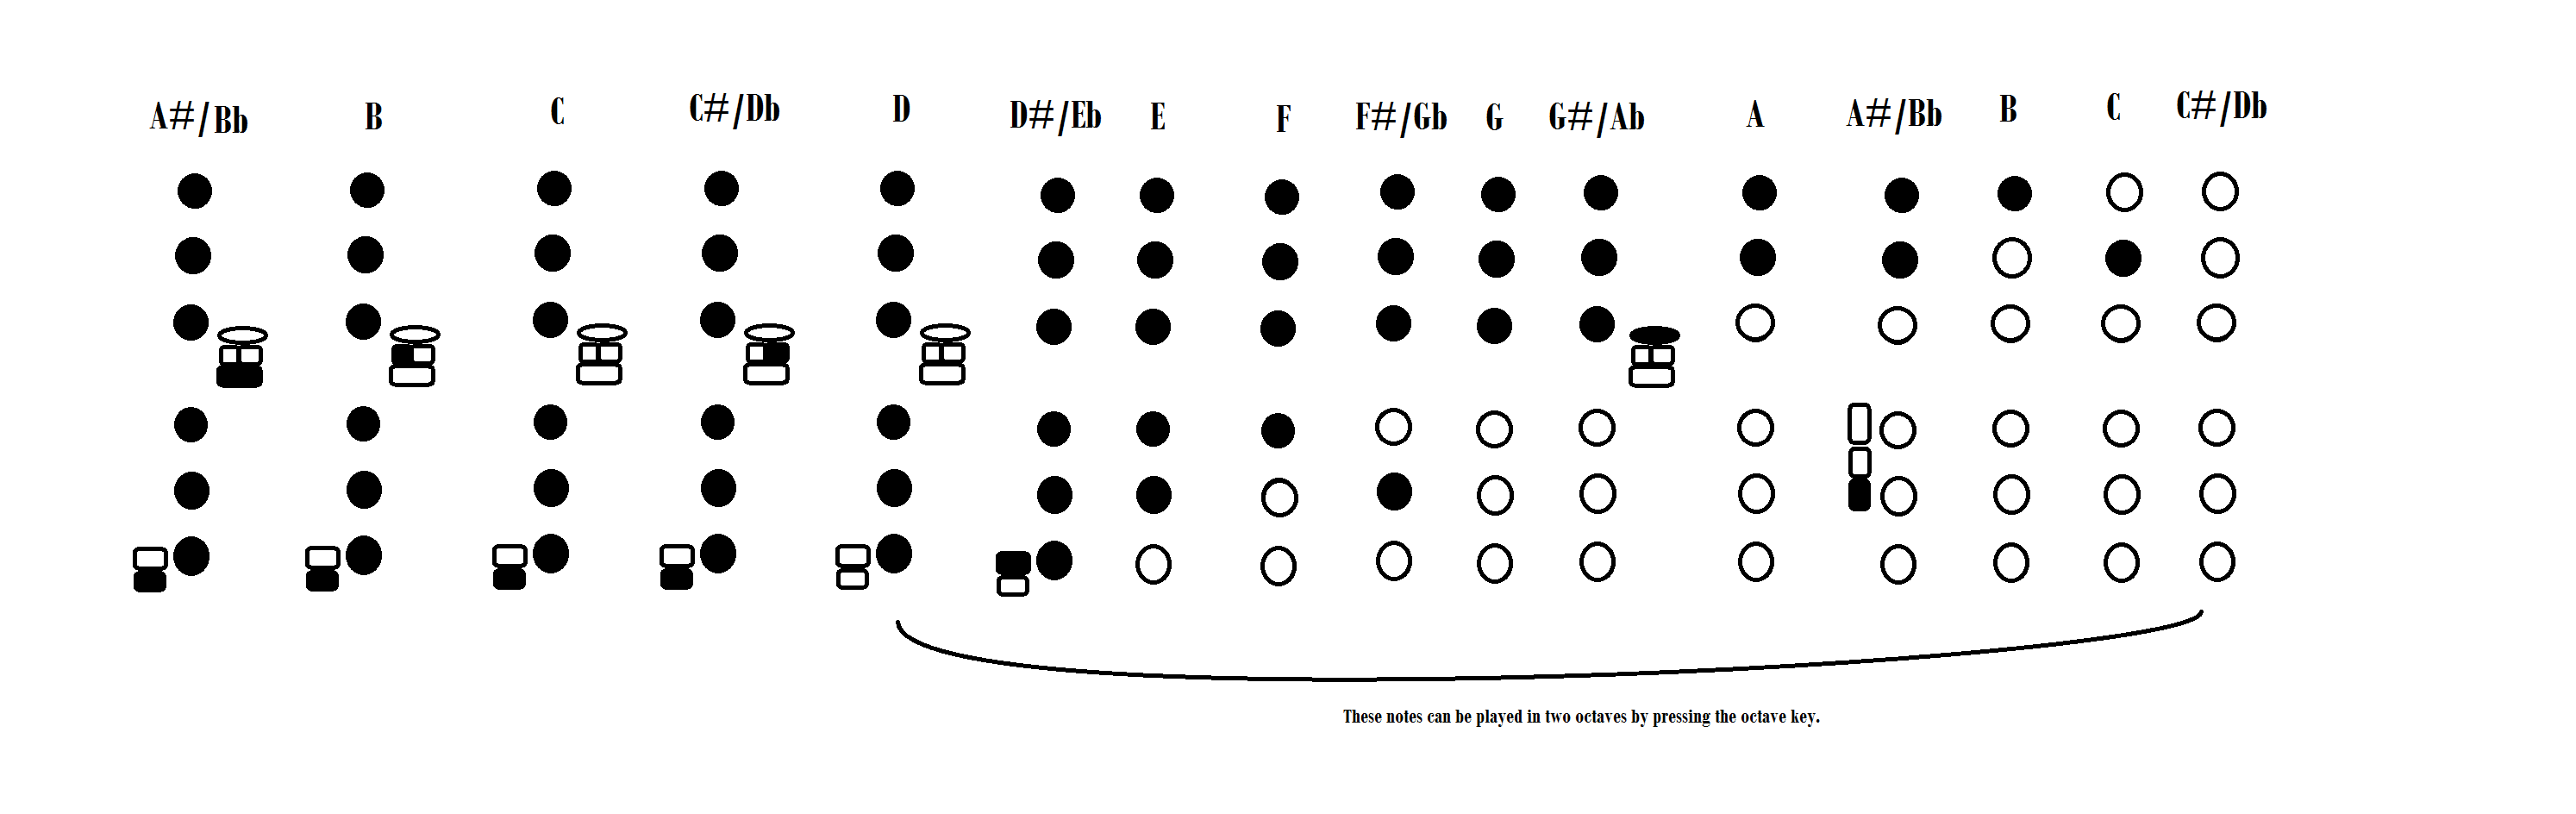 Baritone Sax Key Chart